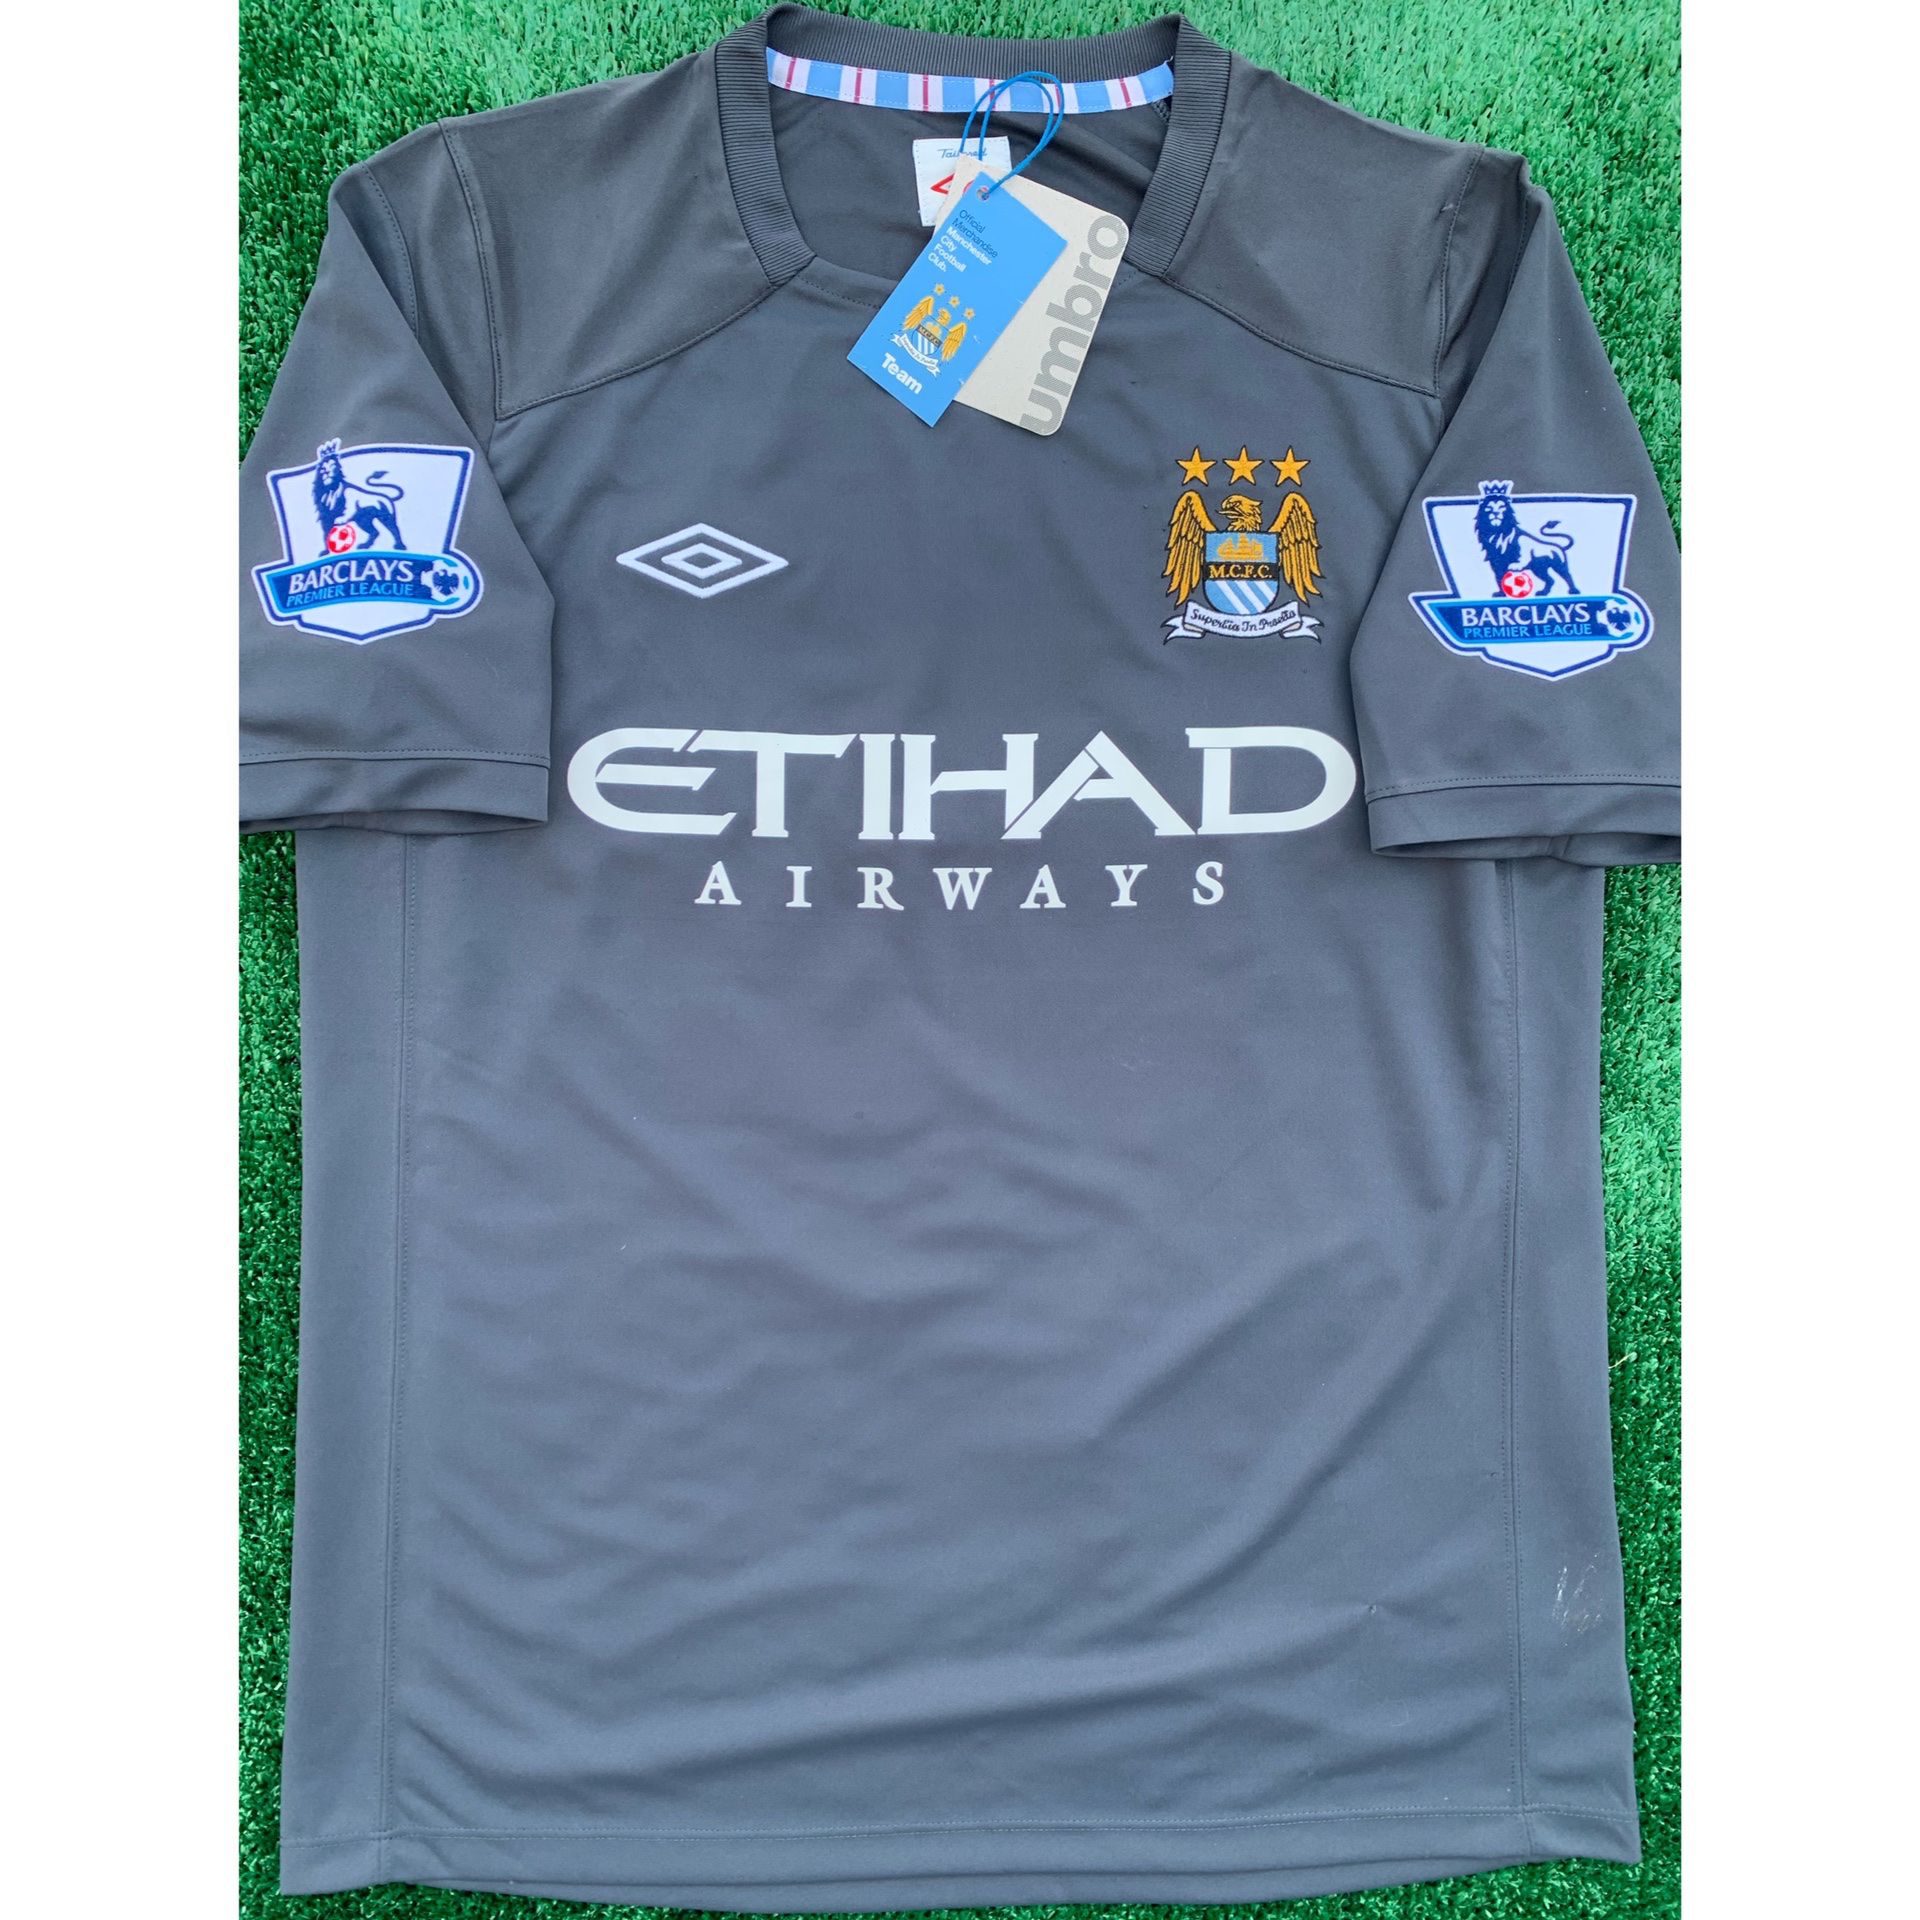 2010/11 Manchester City retro away soccer jersey